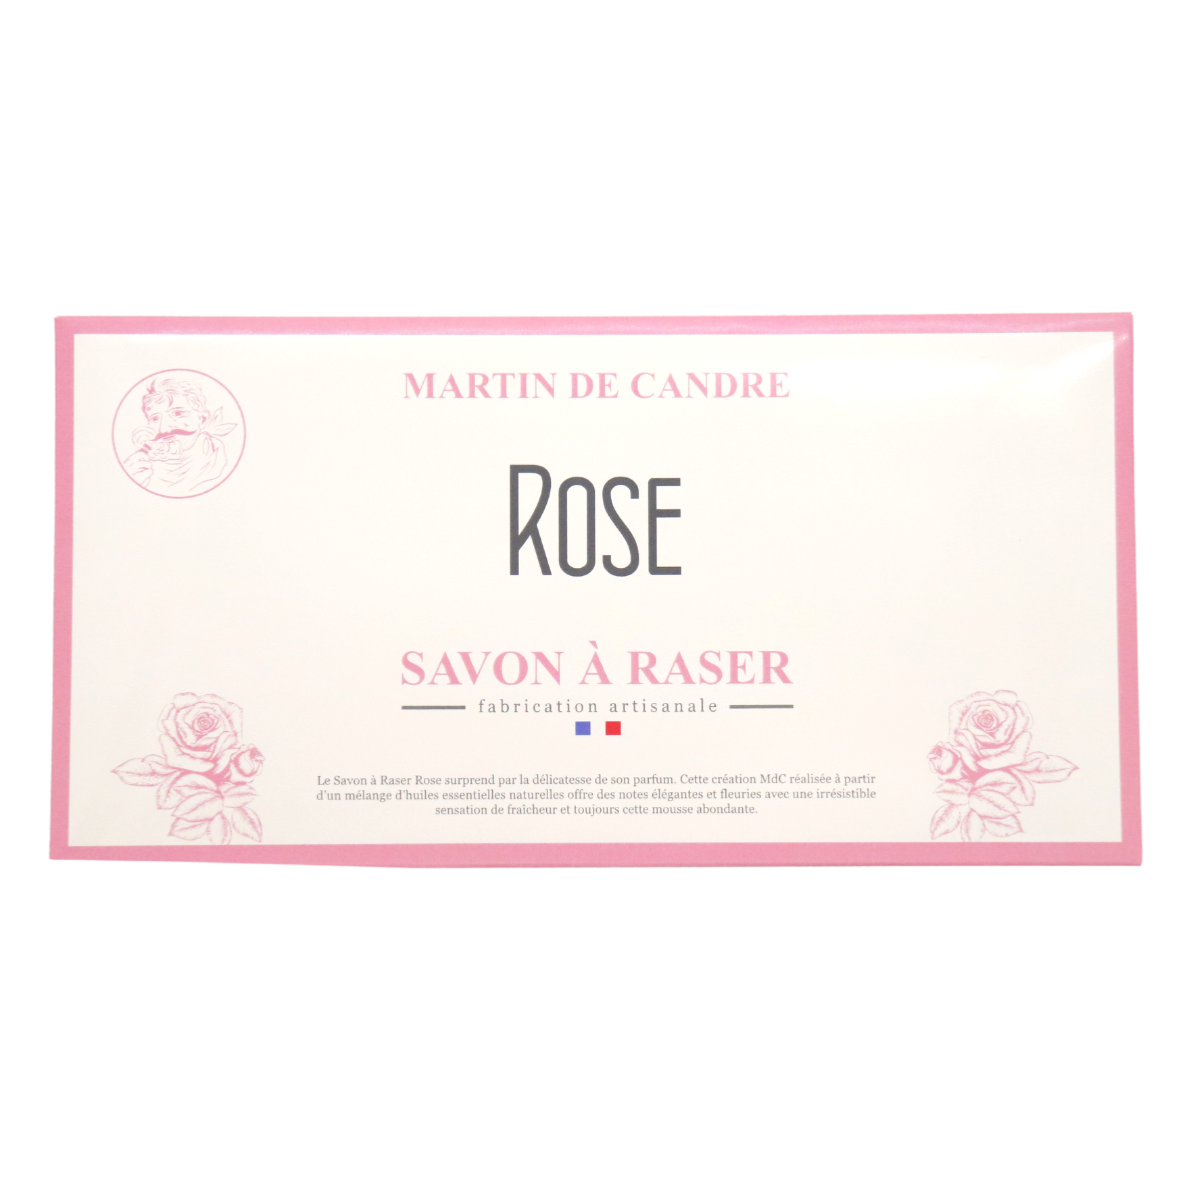 MARTIN DE CANDRE - Savon à raser - Feuille échantillon Rose